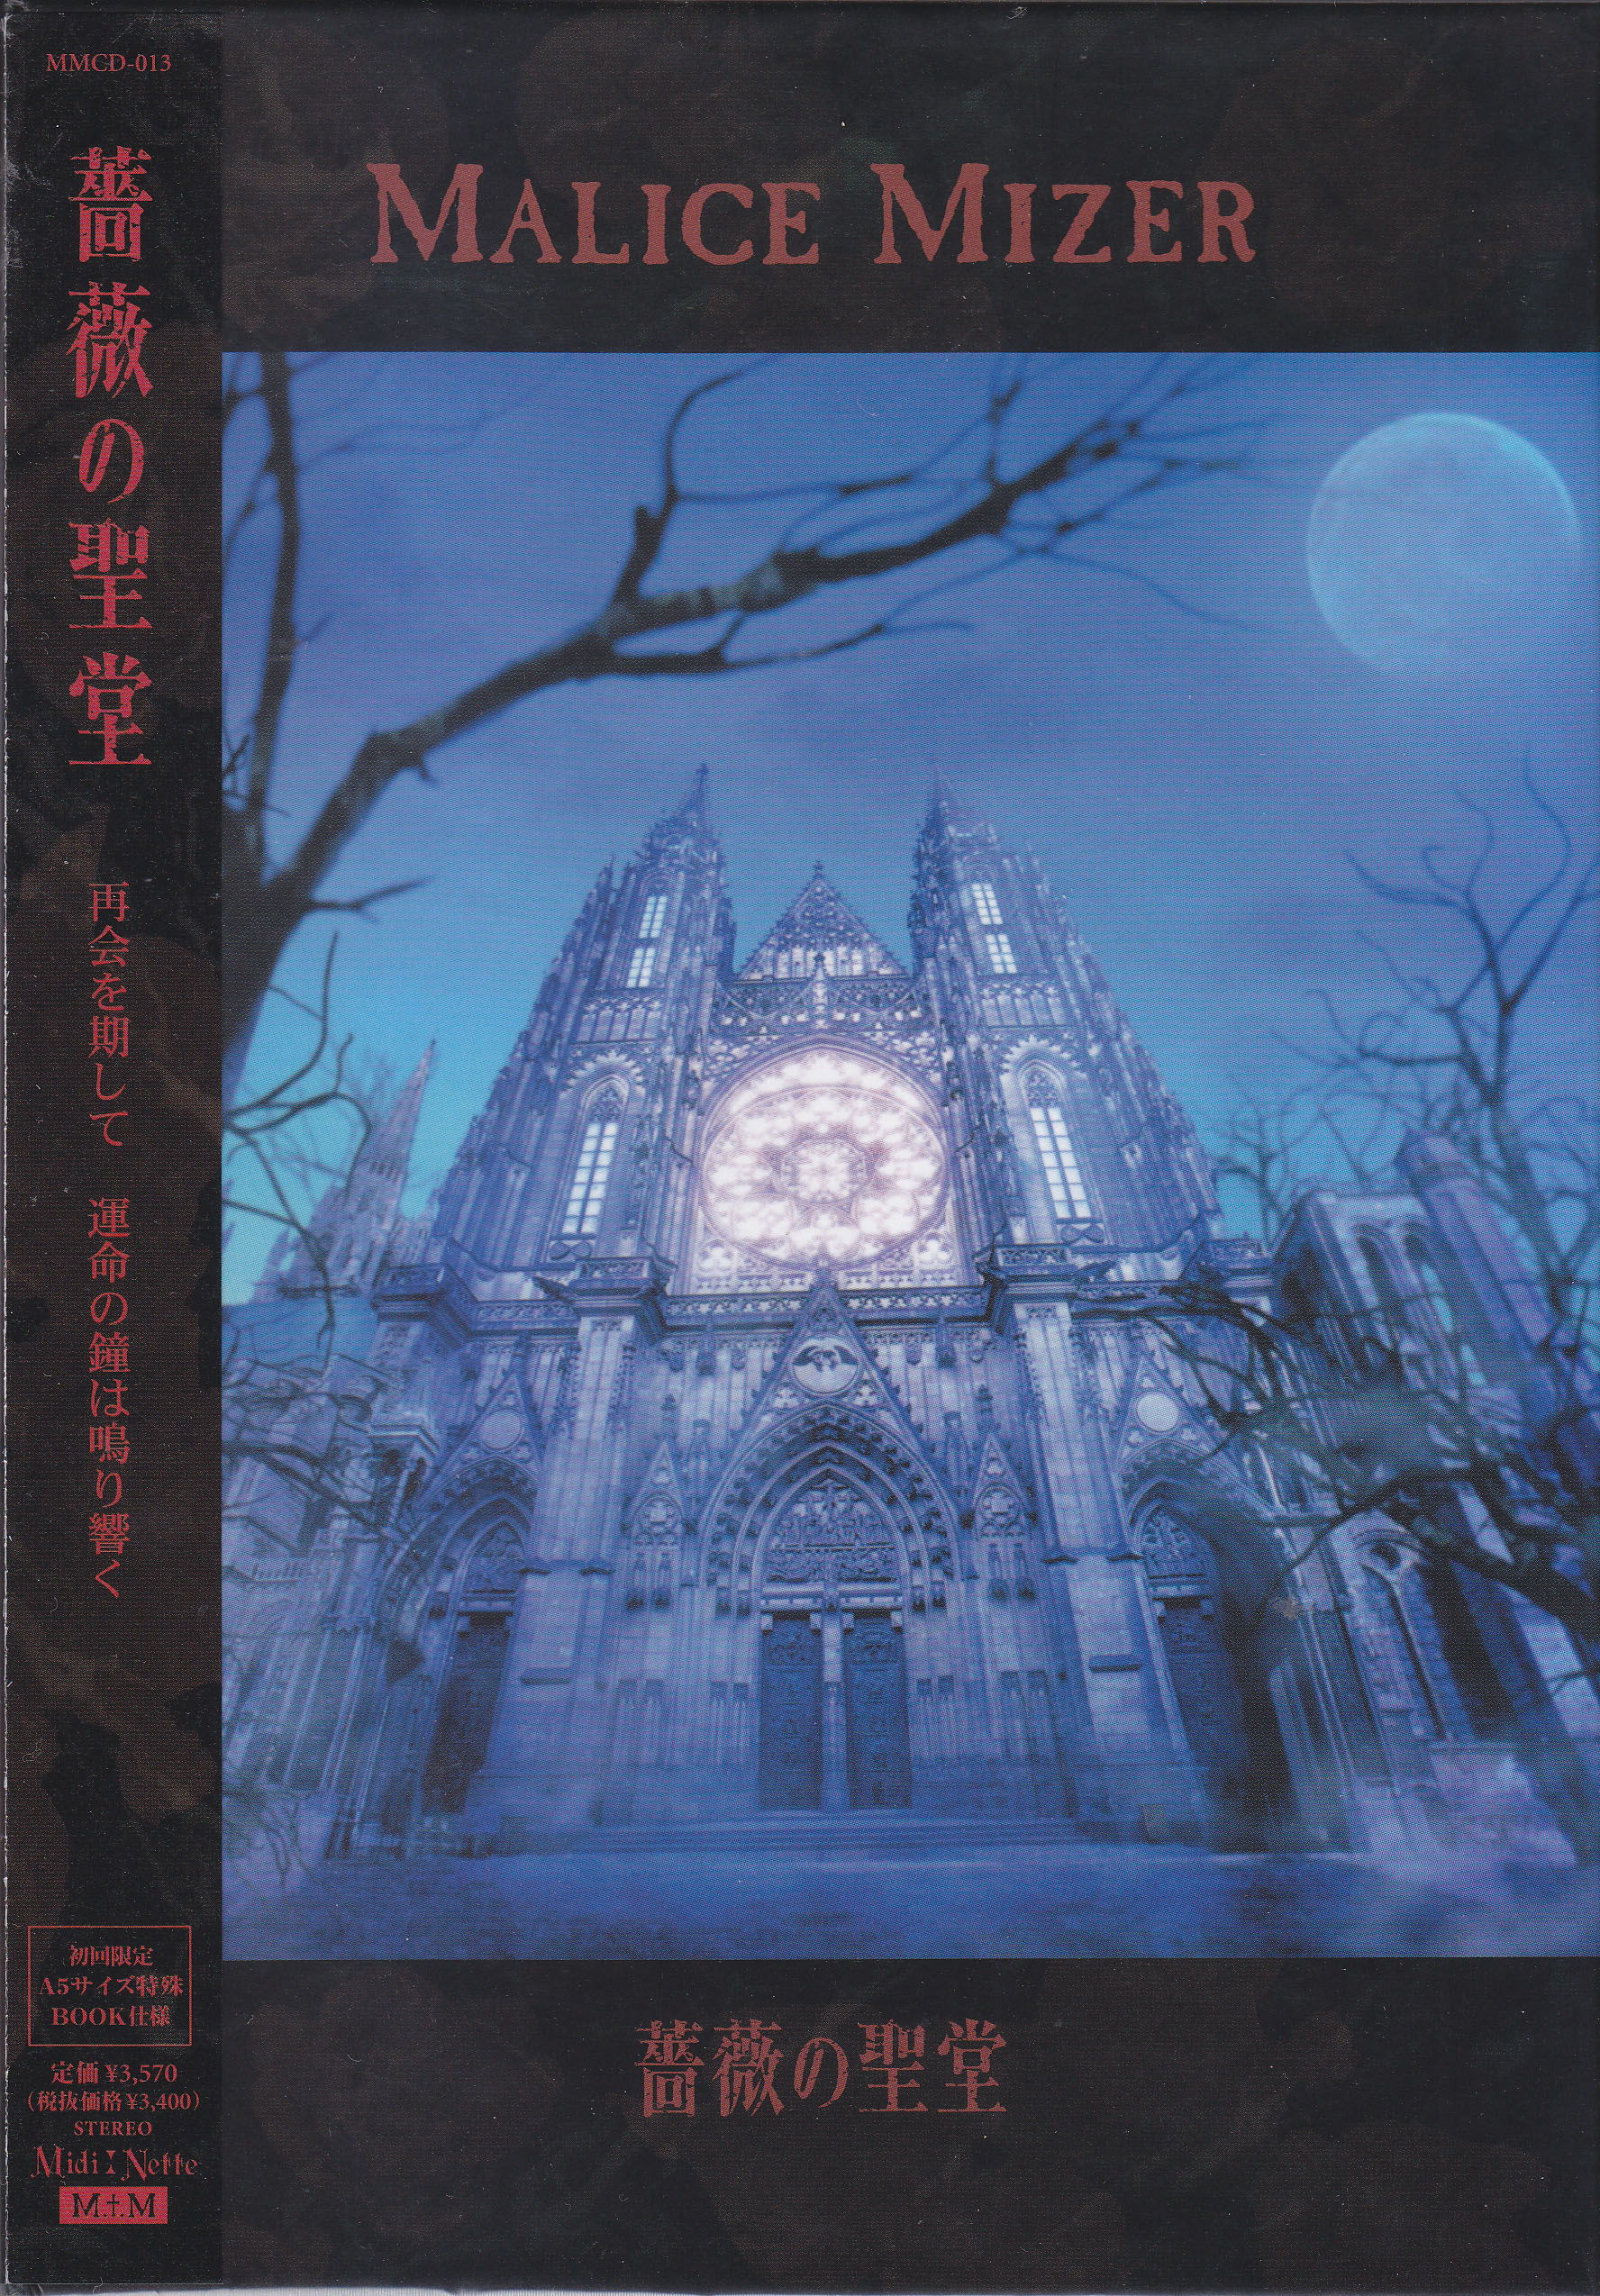 MALICE MIZER ( マリスミゼル )  の CD 薔薇の聖堂 初回盤